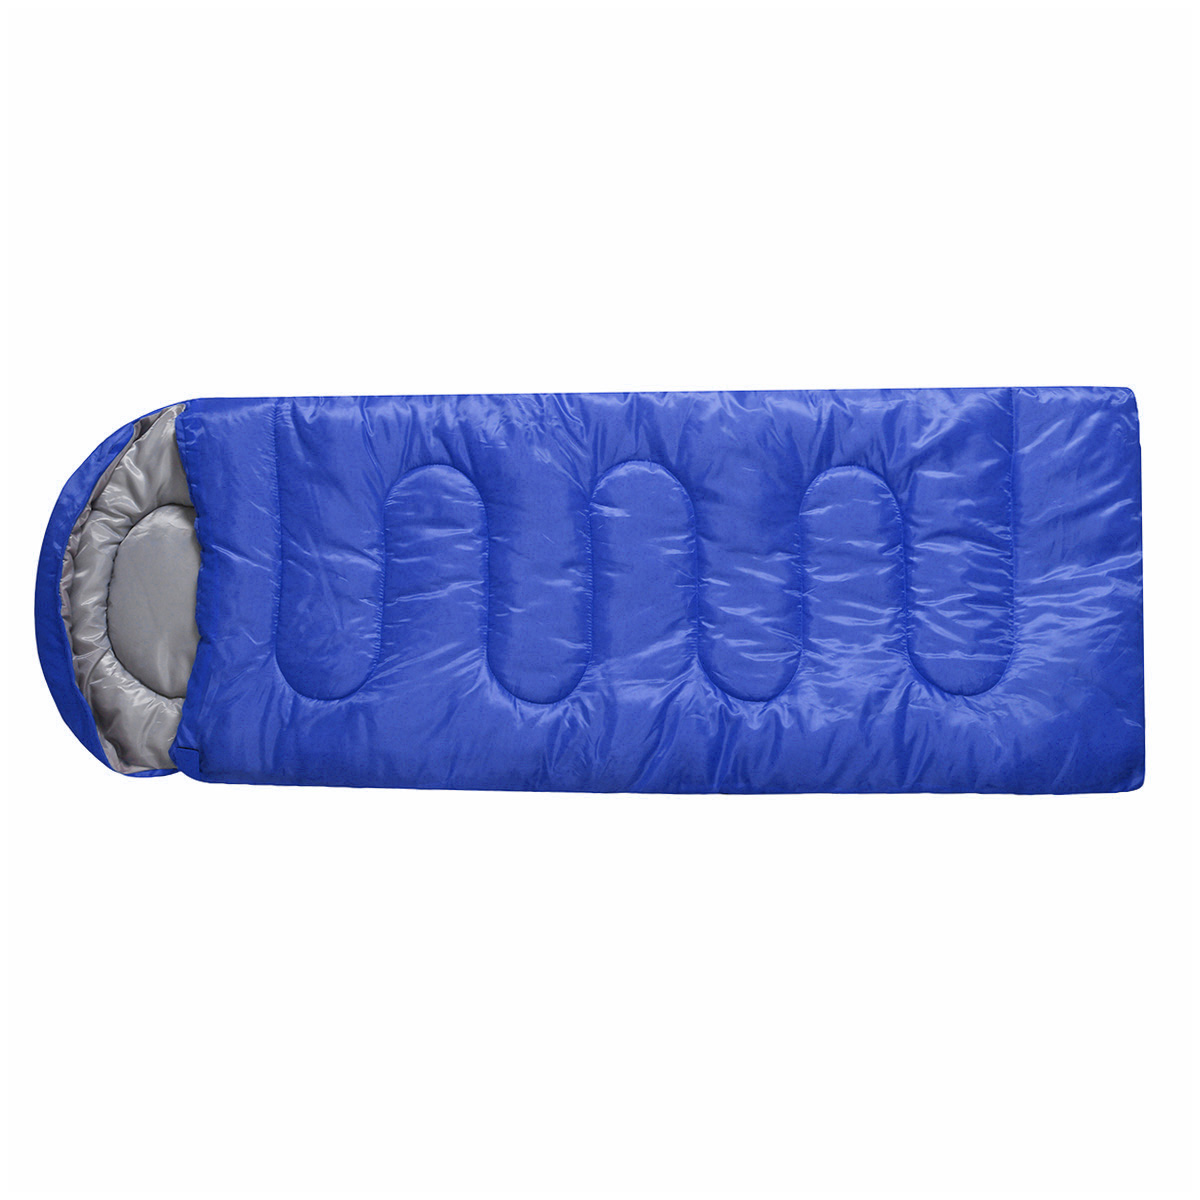 210x75cm-1600G-All-Season-Waterproof-Ultralight-Compact-Hiking-Camping-Single-Sleeping-Bag-with-Carr-1715086-5